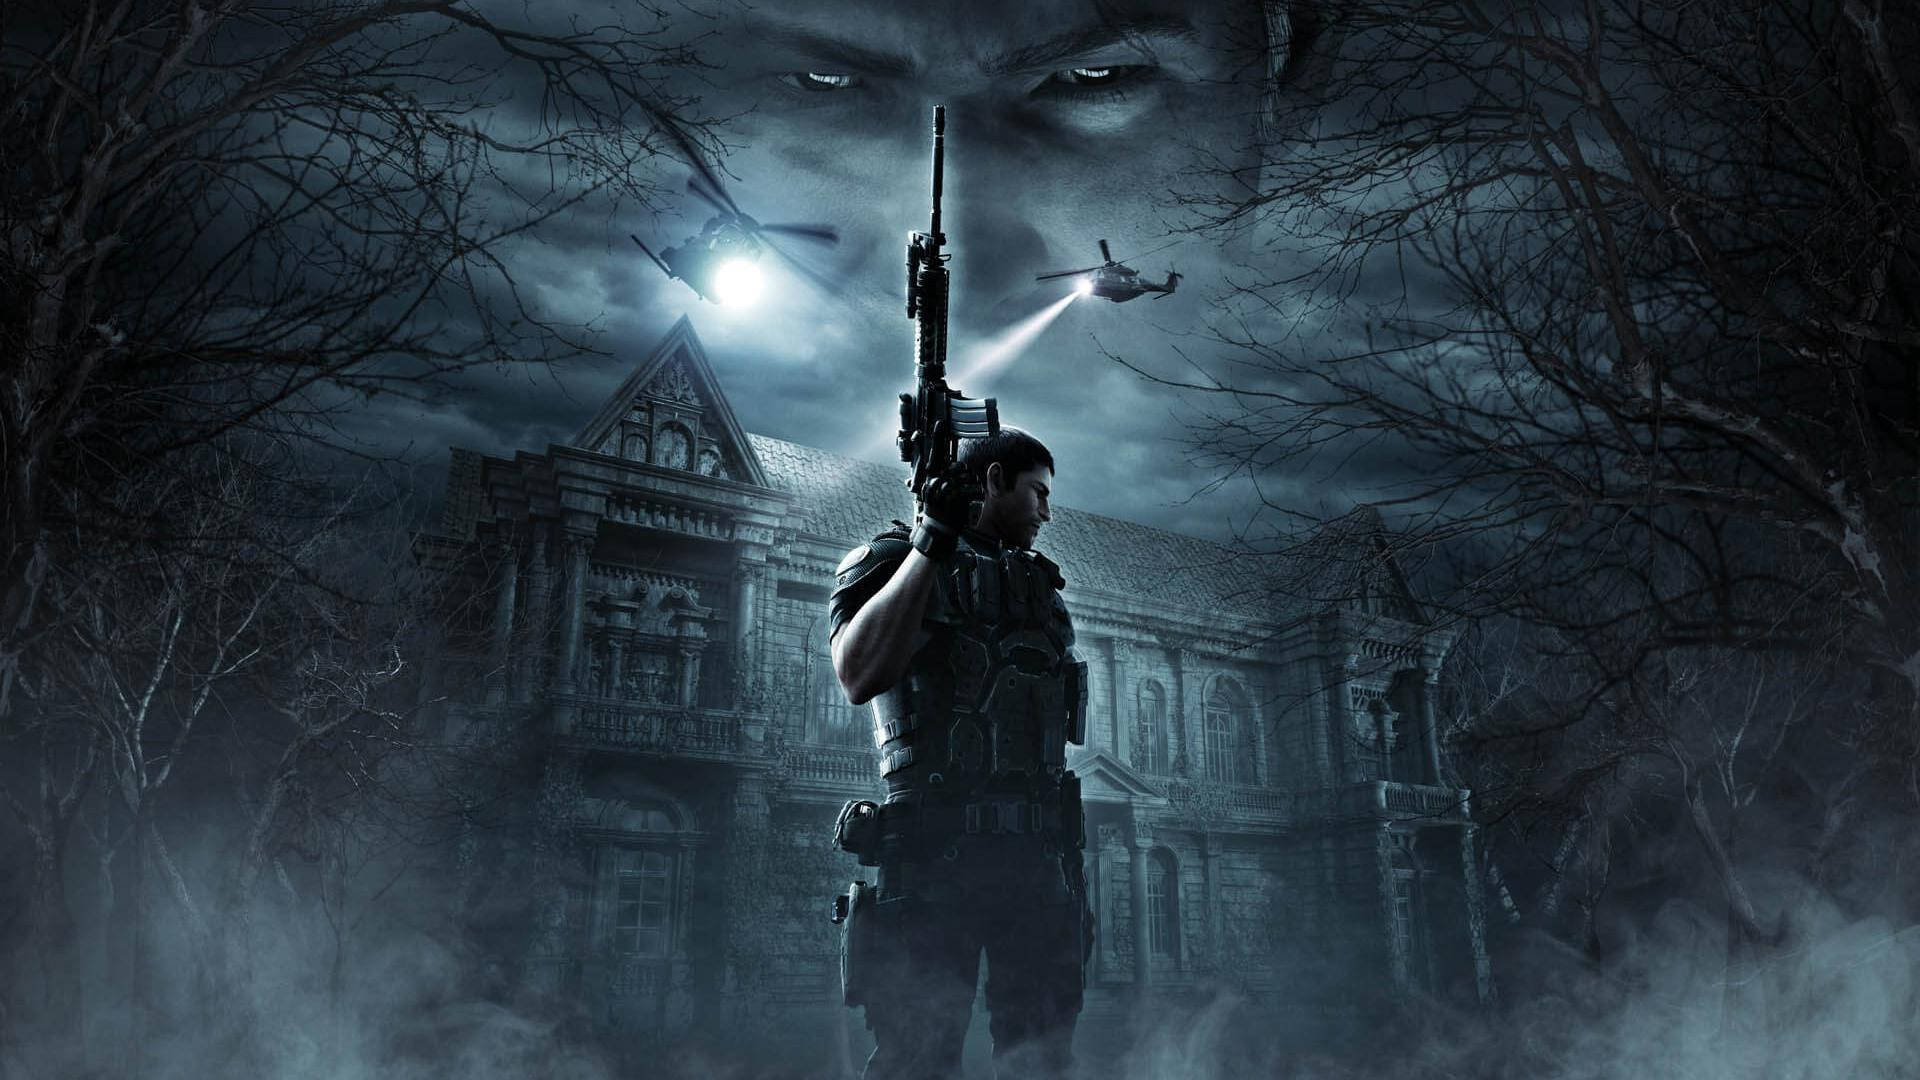 Free Resident Evil Wallpaper Downloads, [100+] Resident Evil Wallpapers for  FREE 